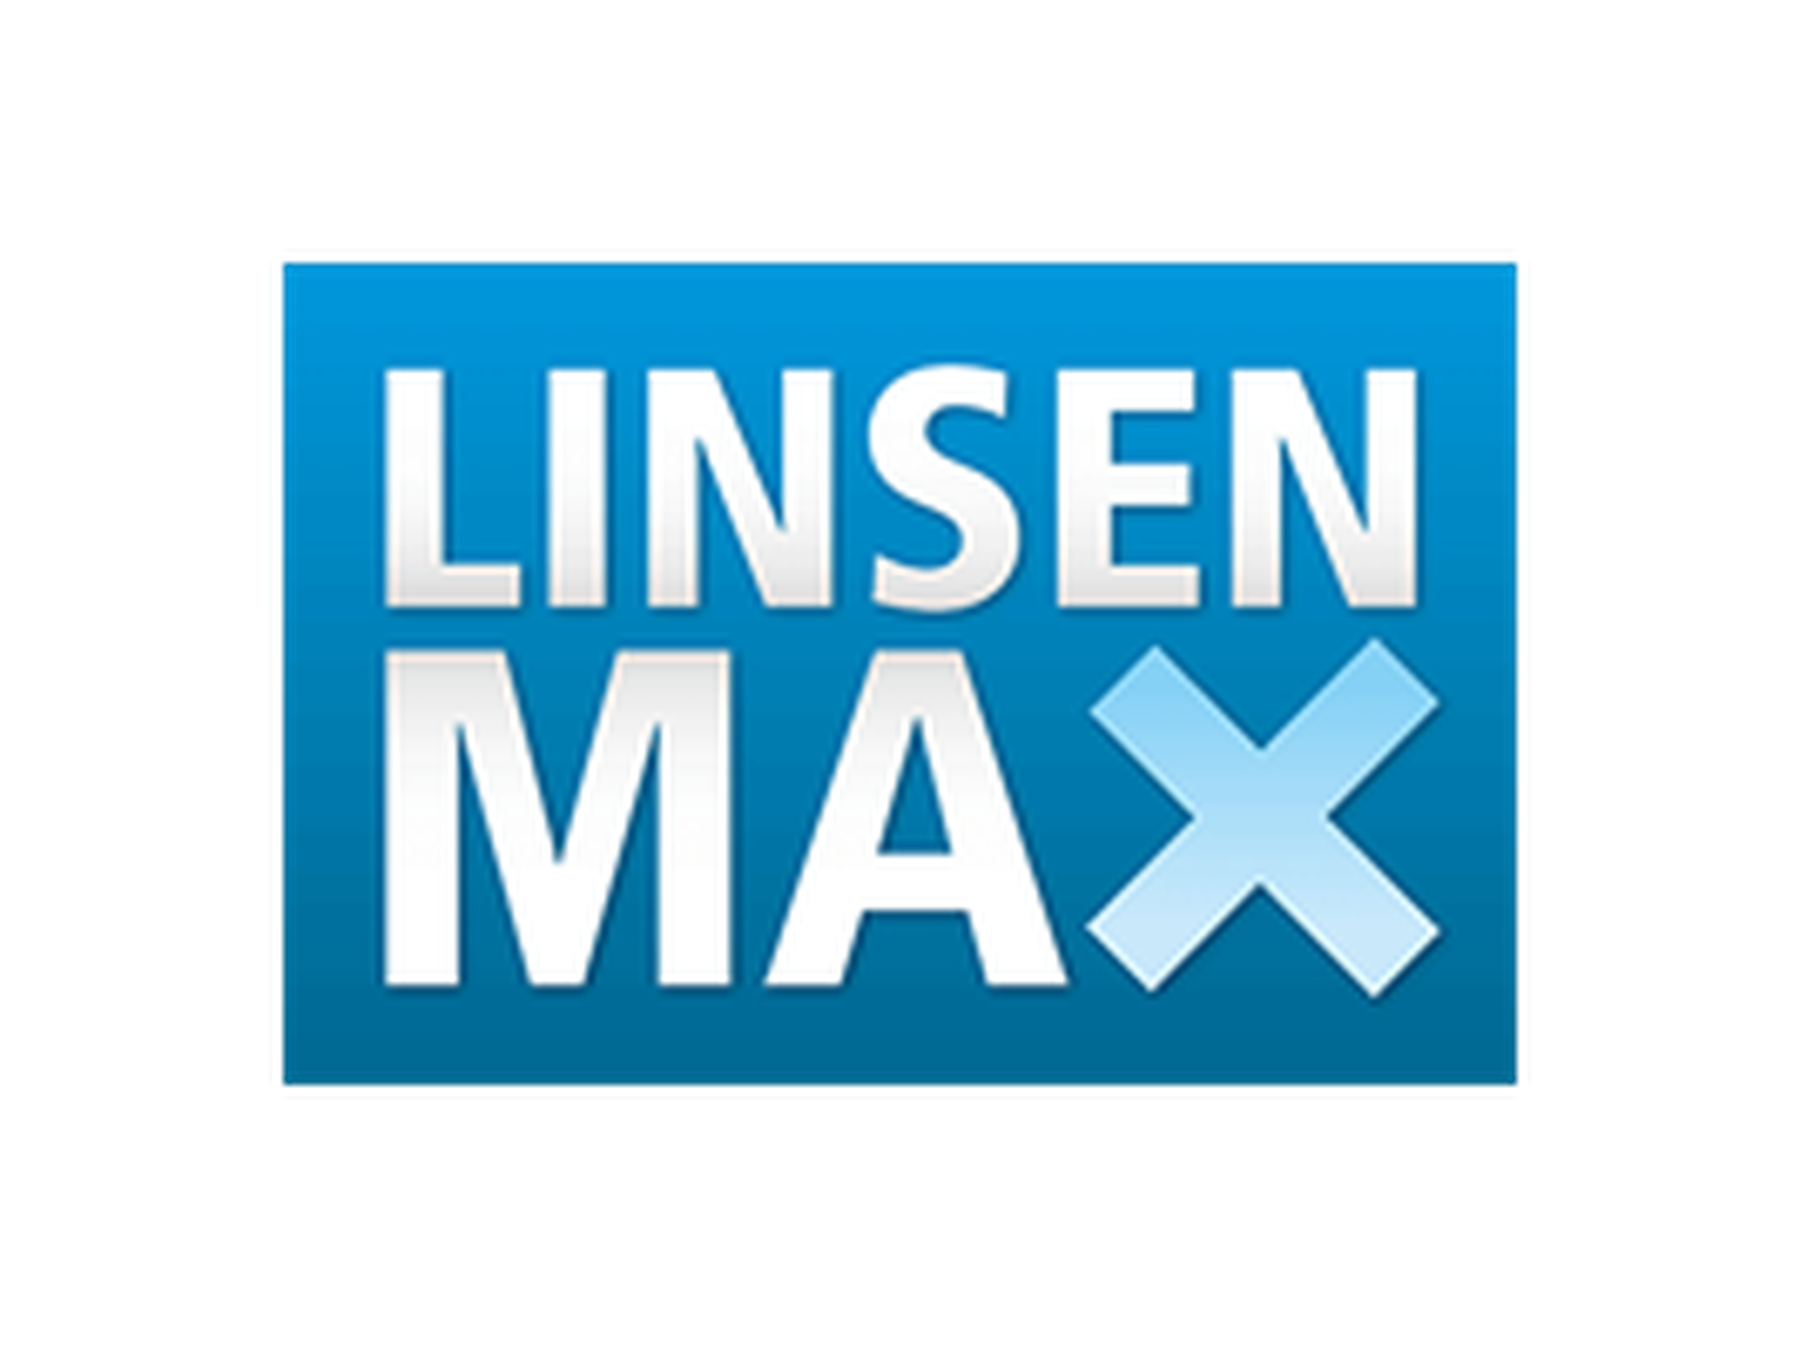 Linsenmax